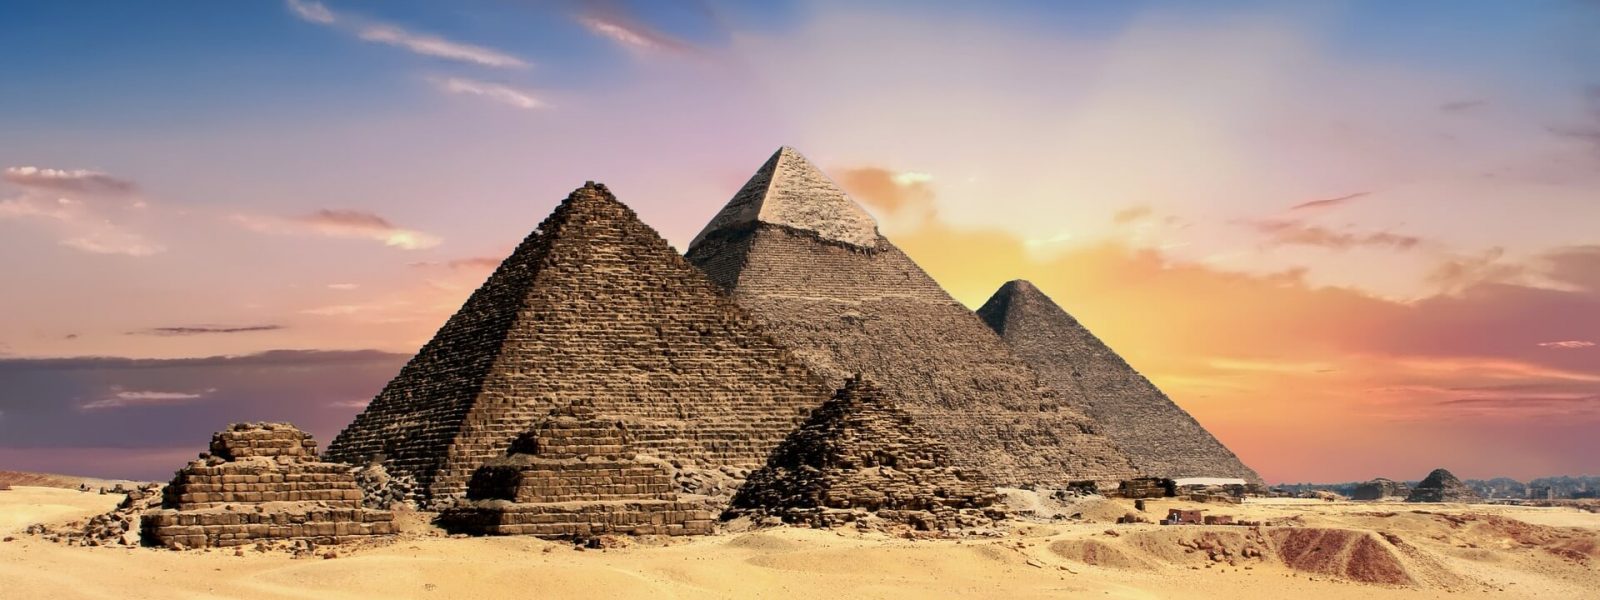 Motywować Ugniatać Wydalać quienes construyeron las piramides de egipto